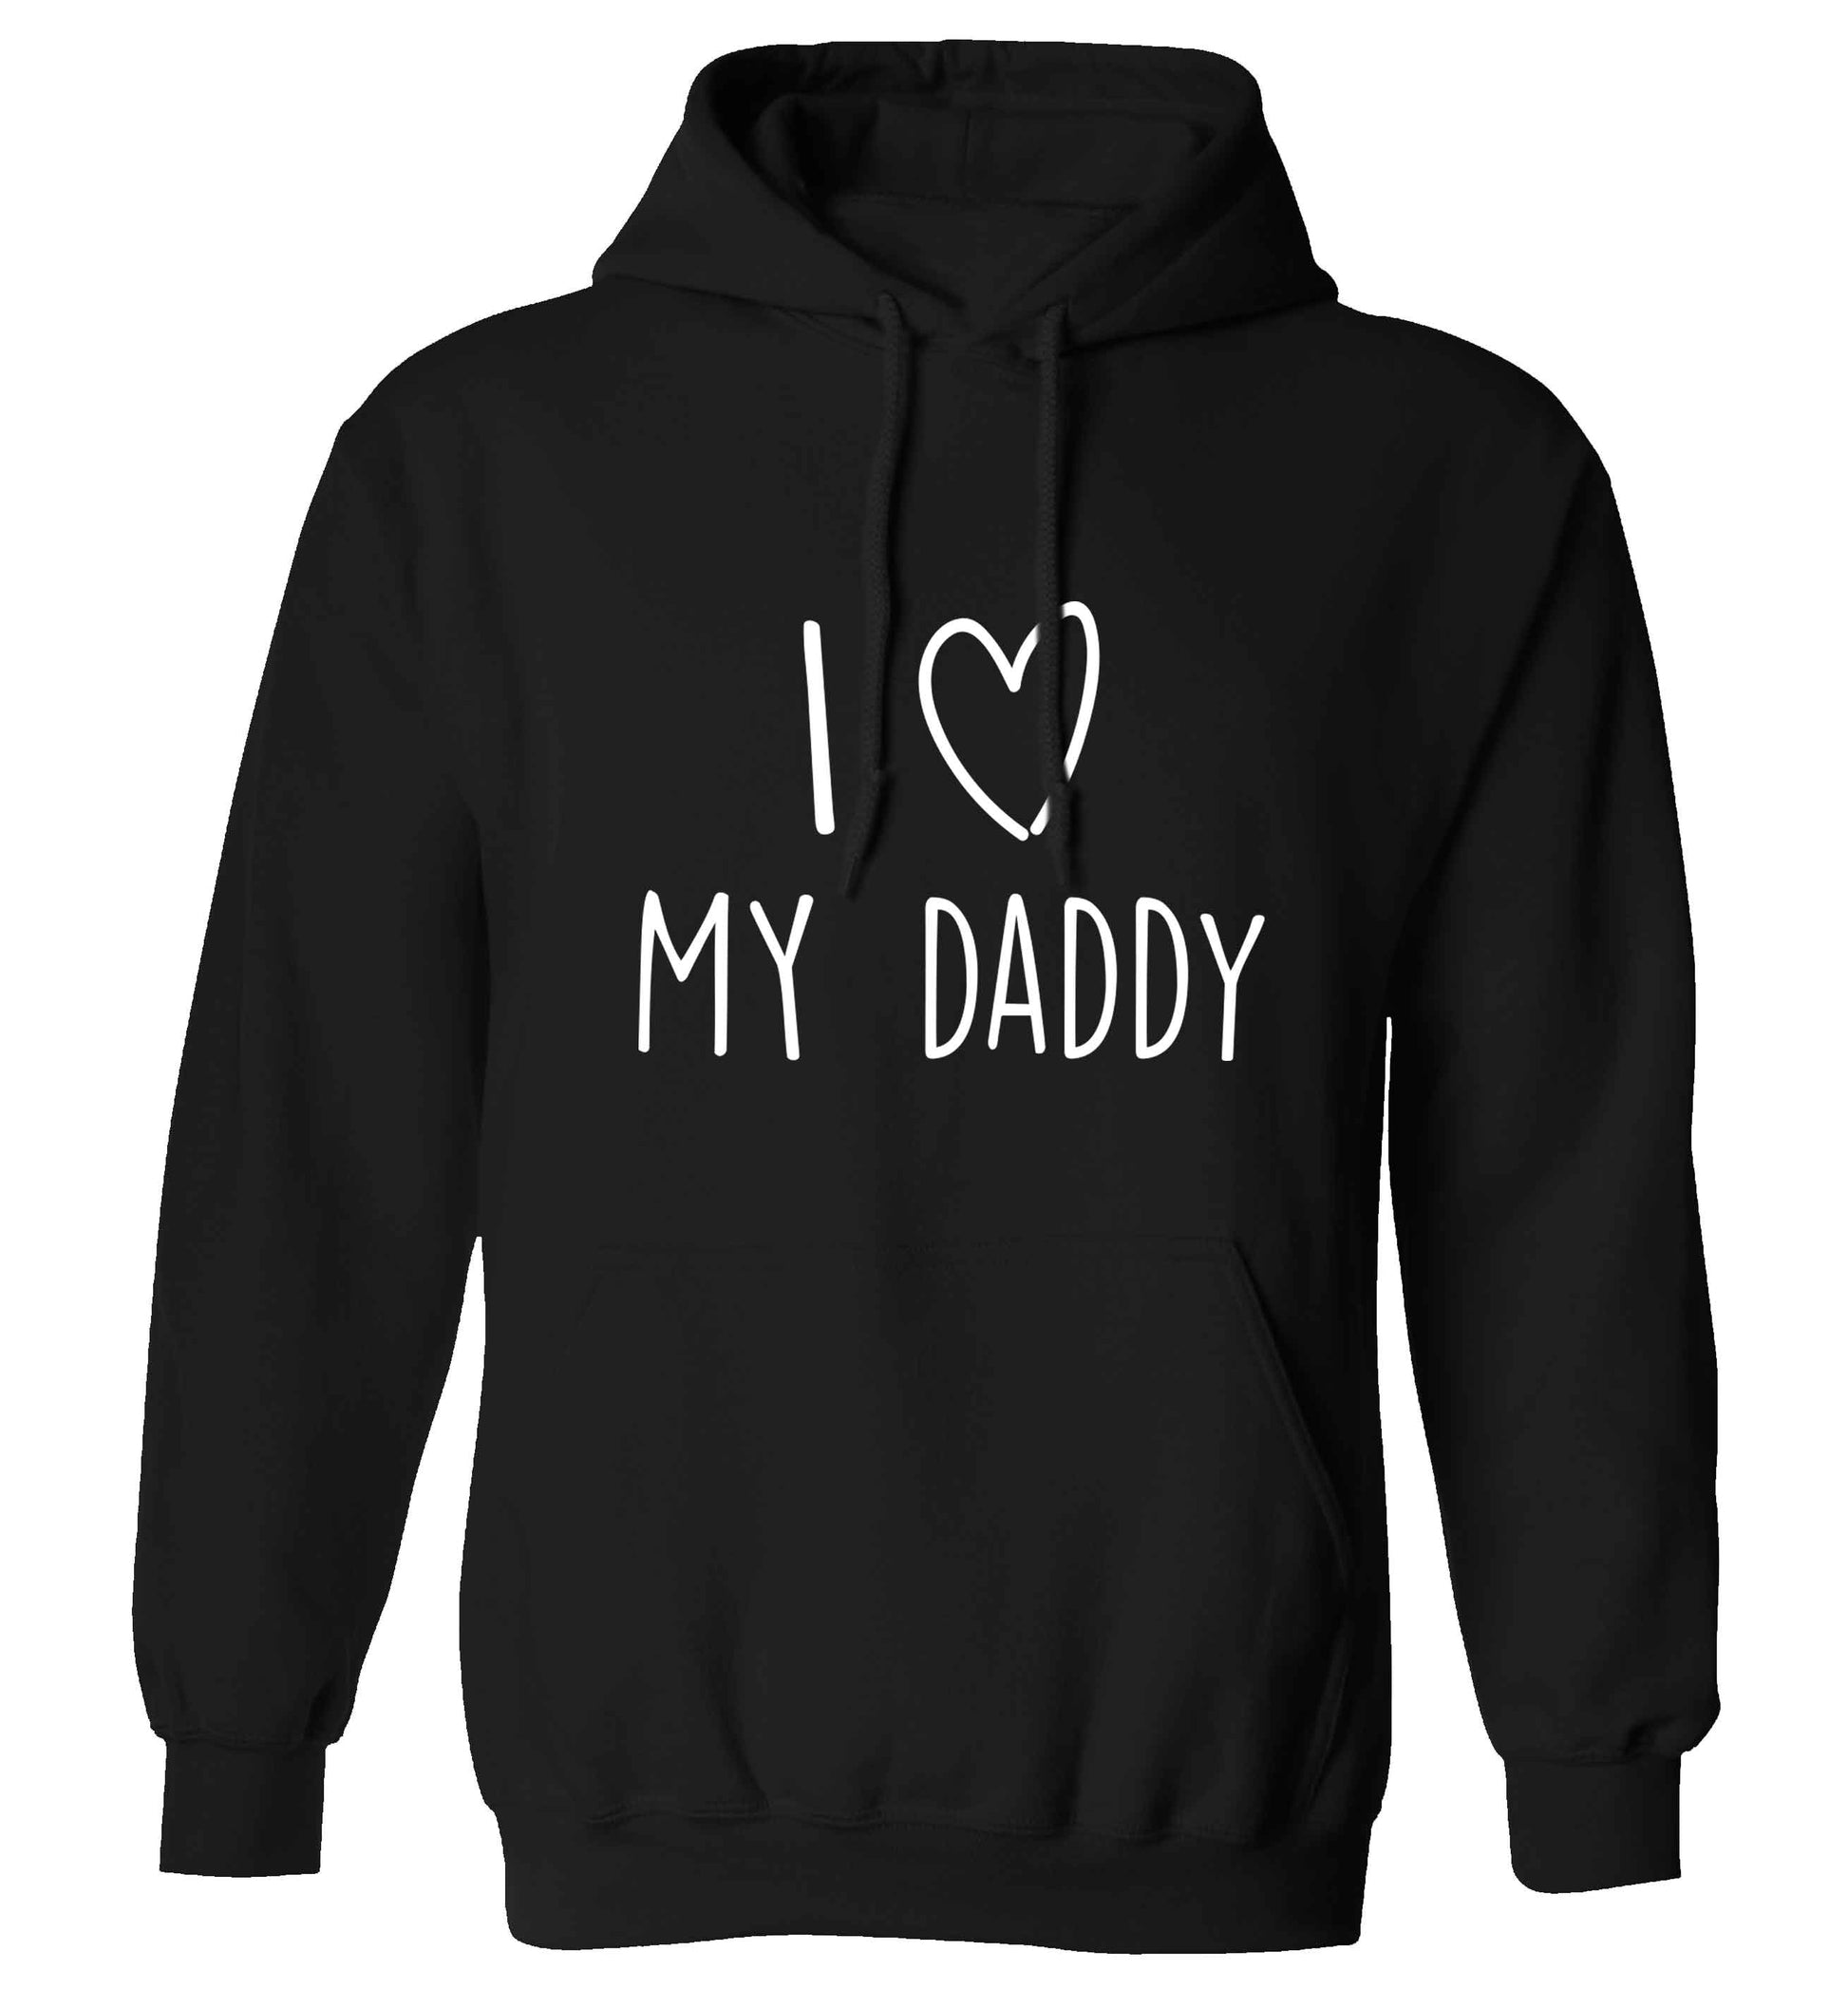 I love my daddy adults unisex black hoodie 2XL